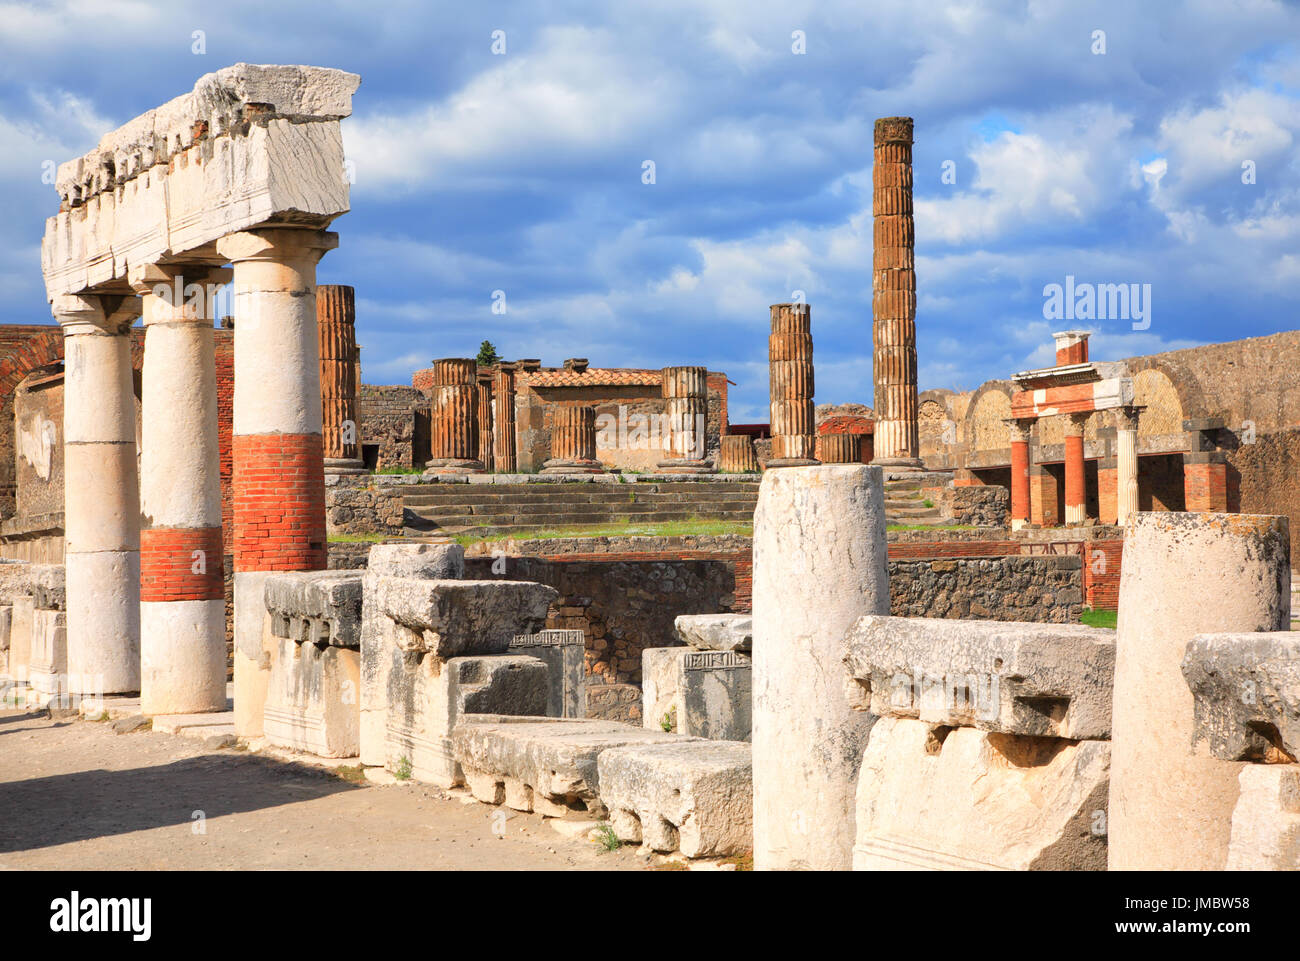 Ruins of the Forum of Pompeii, Campania, Italy. Stock Photo